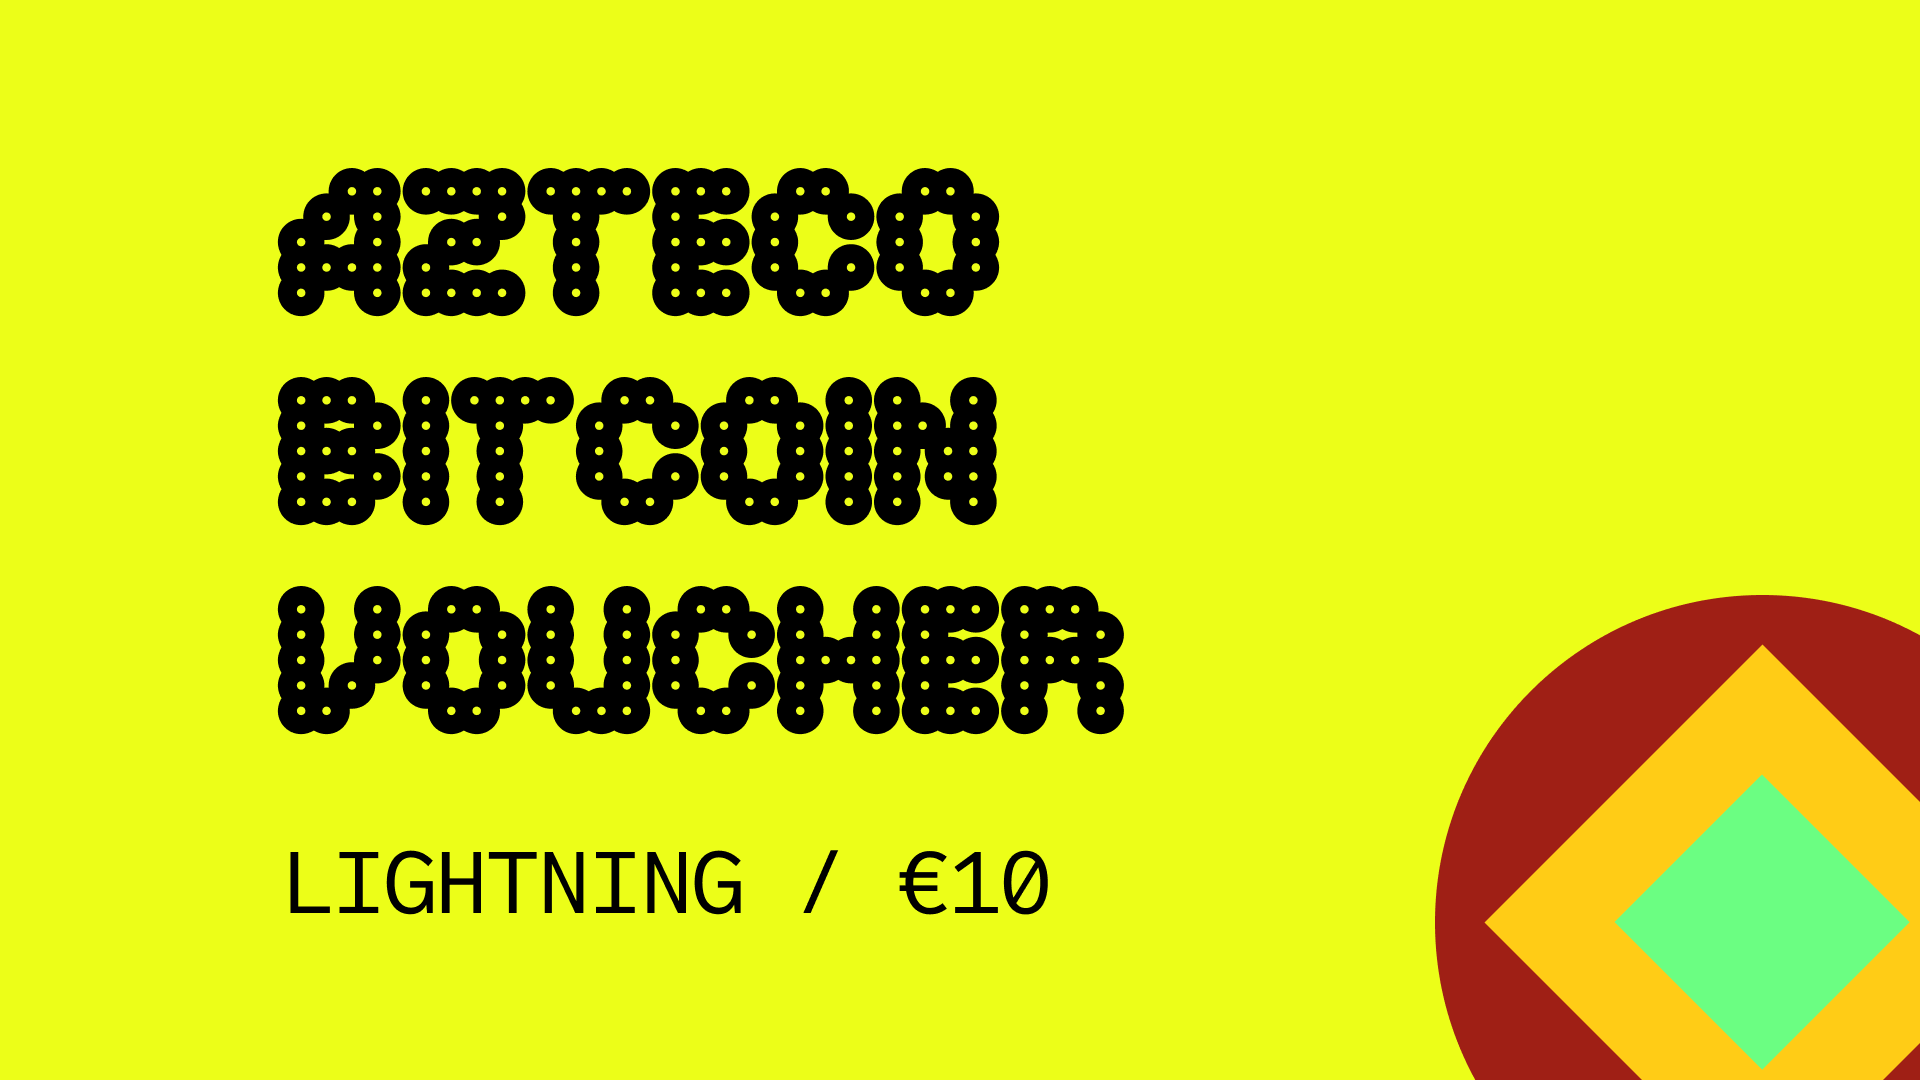 Azteco Bitcoin Lighting €10 Voucher (11.3$)